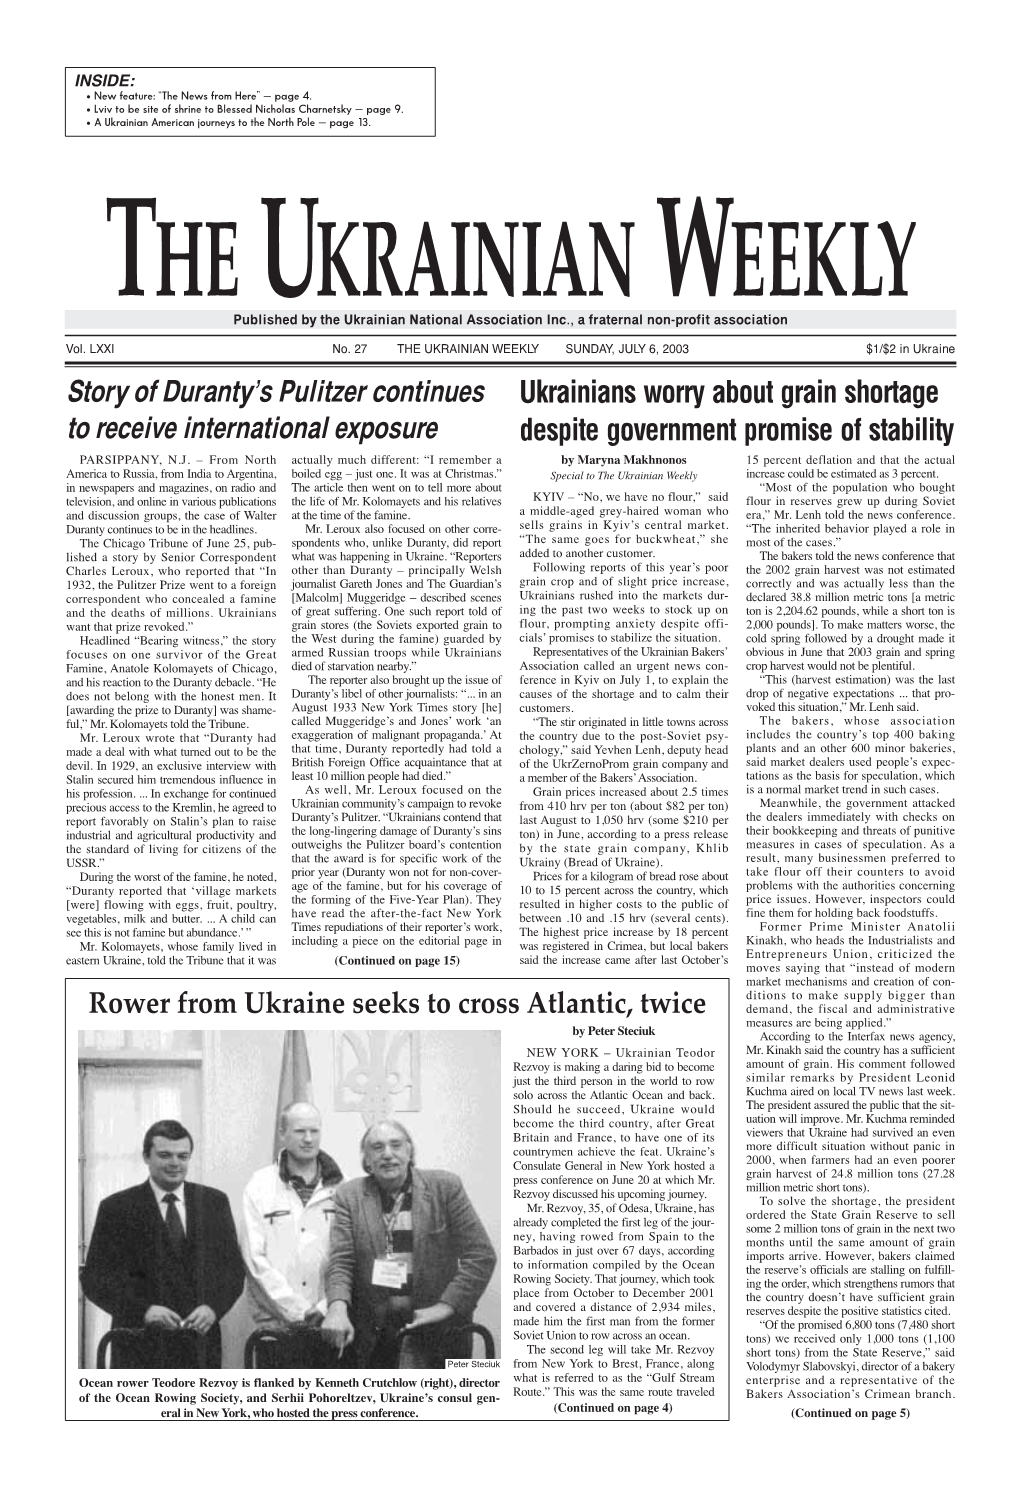 The Ukrainian Weekly 2003, No.27